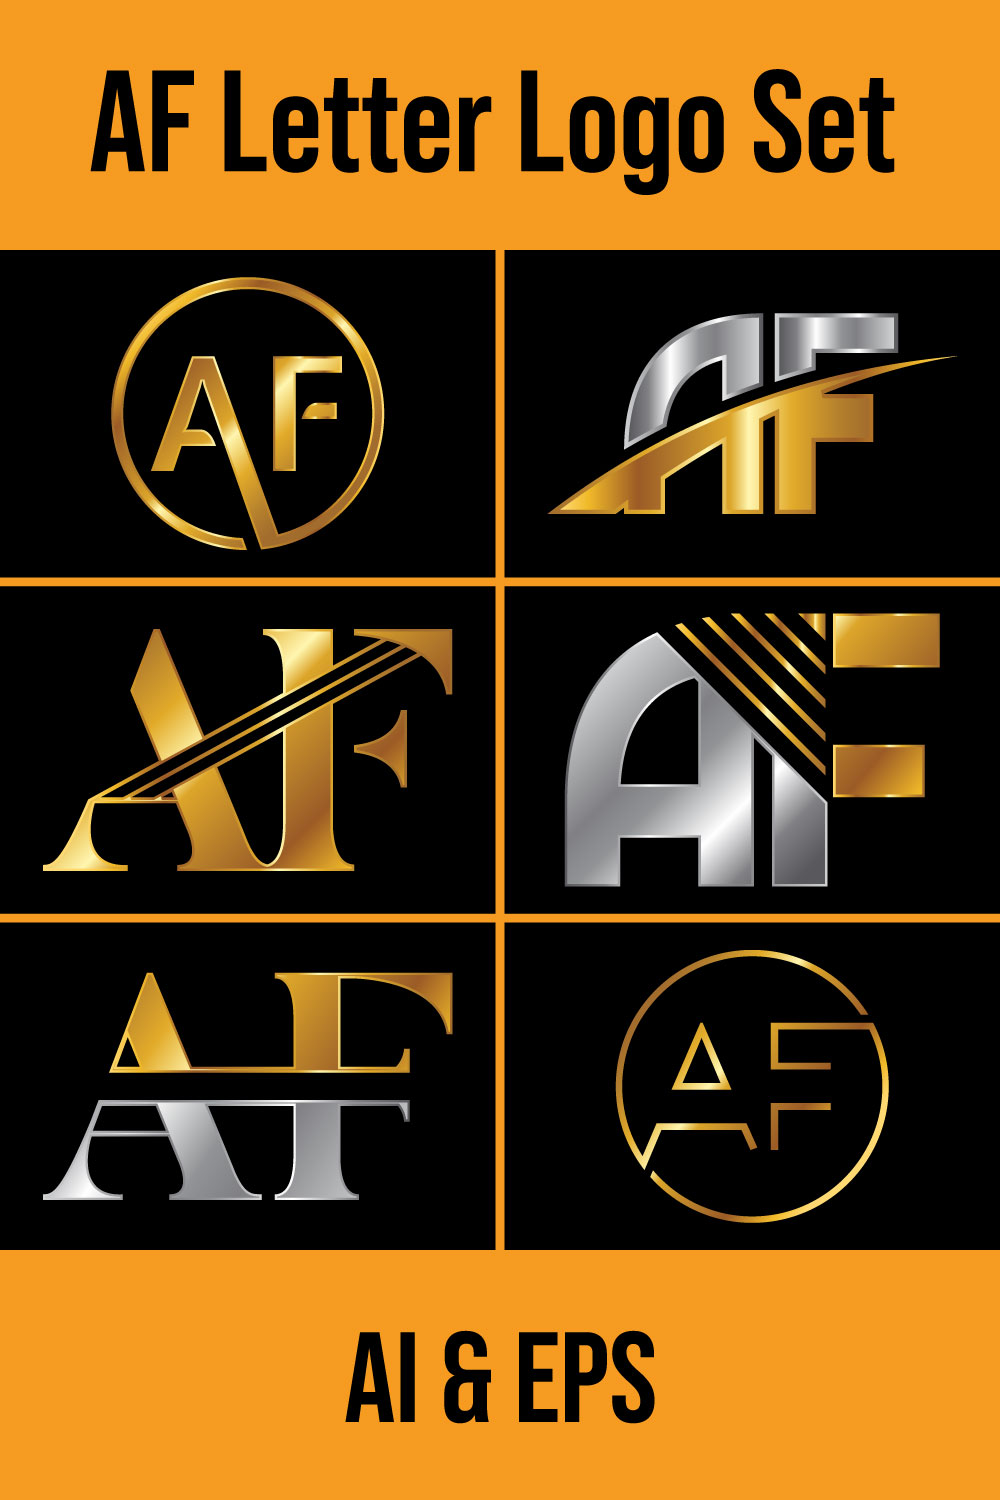 A-F Initial Letter Logo Design